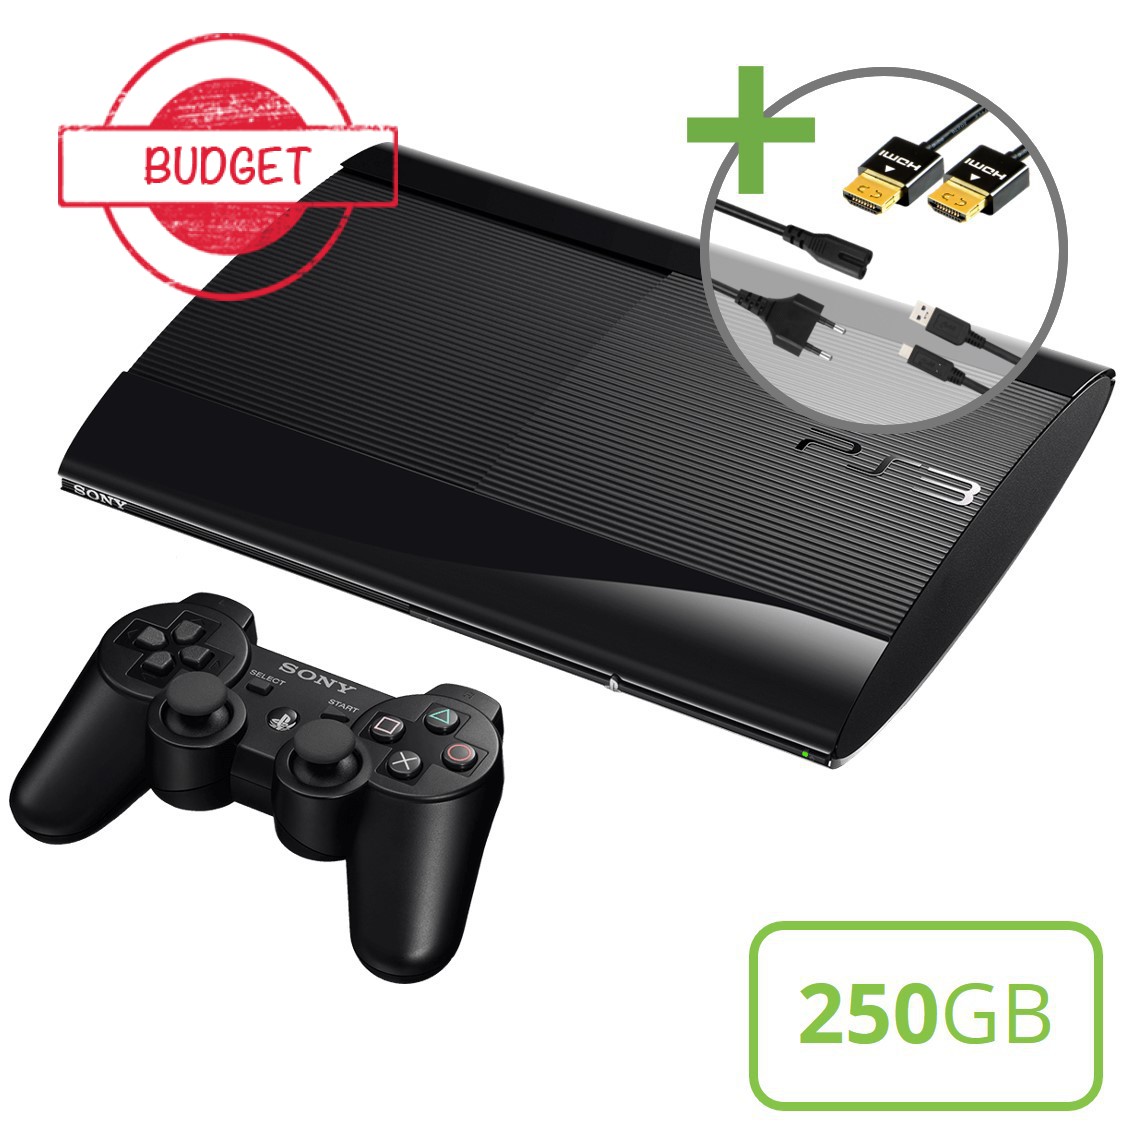 Sony PlayStation 3 Super Slim (250GB) Starter Pack - DualShock Edition - Budget Kopen | Playstation 3 Hardware